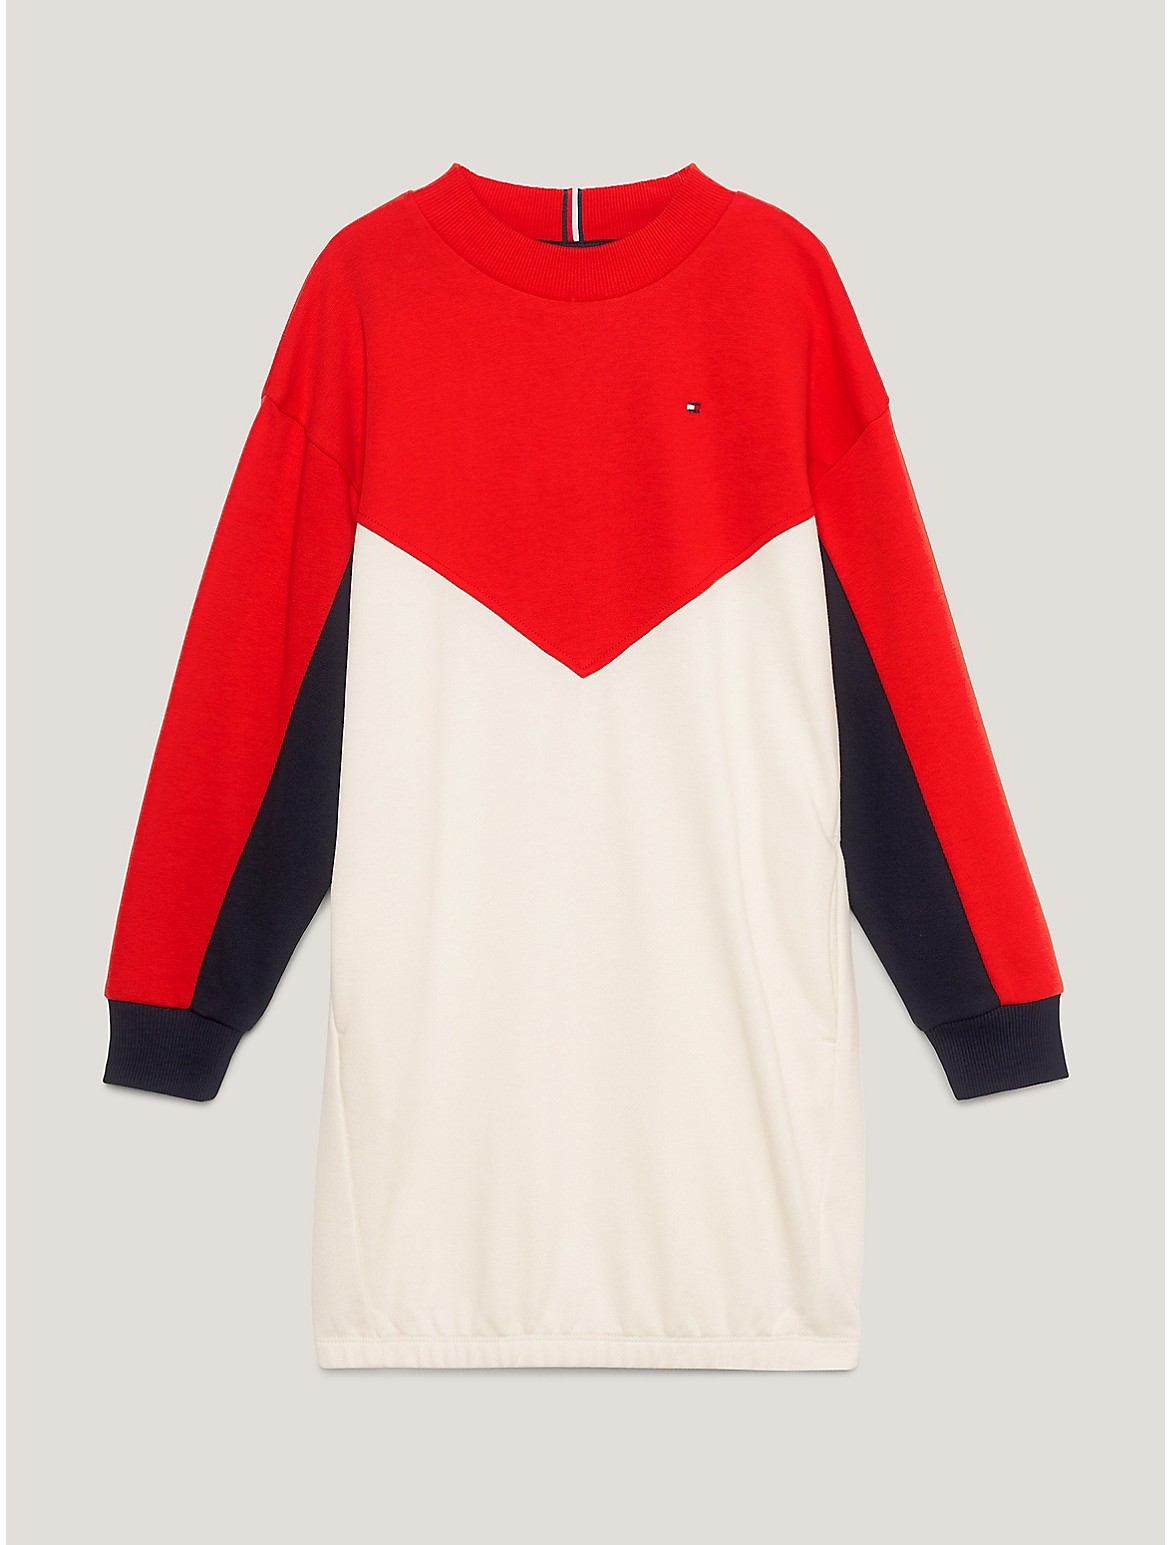 Tommy Hilfiger Girls' Kids' Colorblock Sweatshirt Dress - Multi - 10